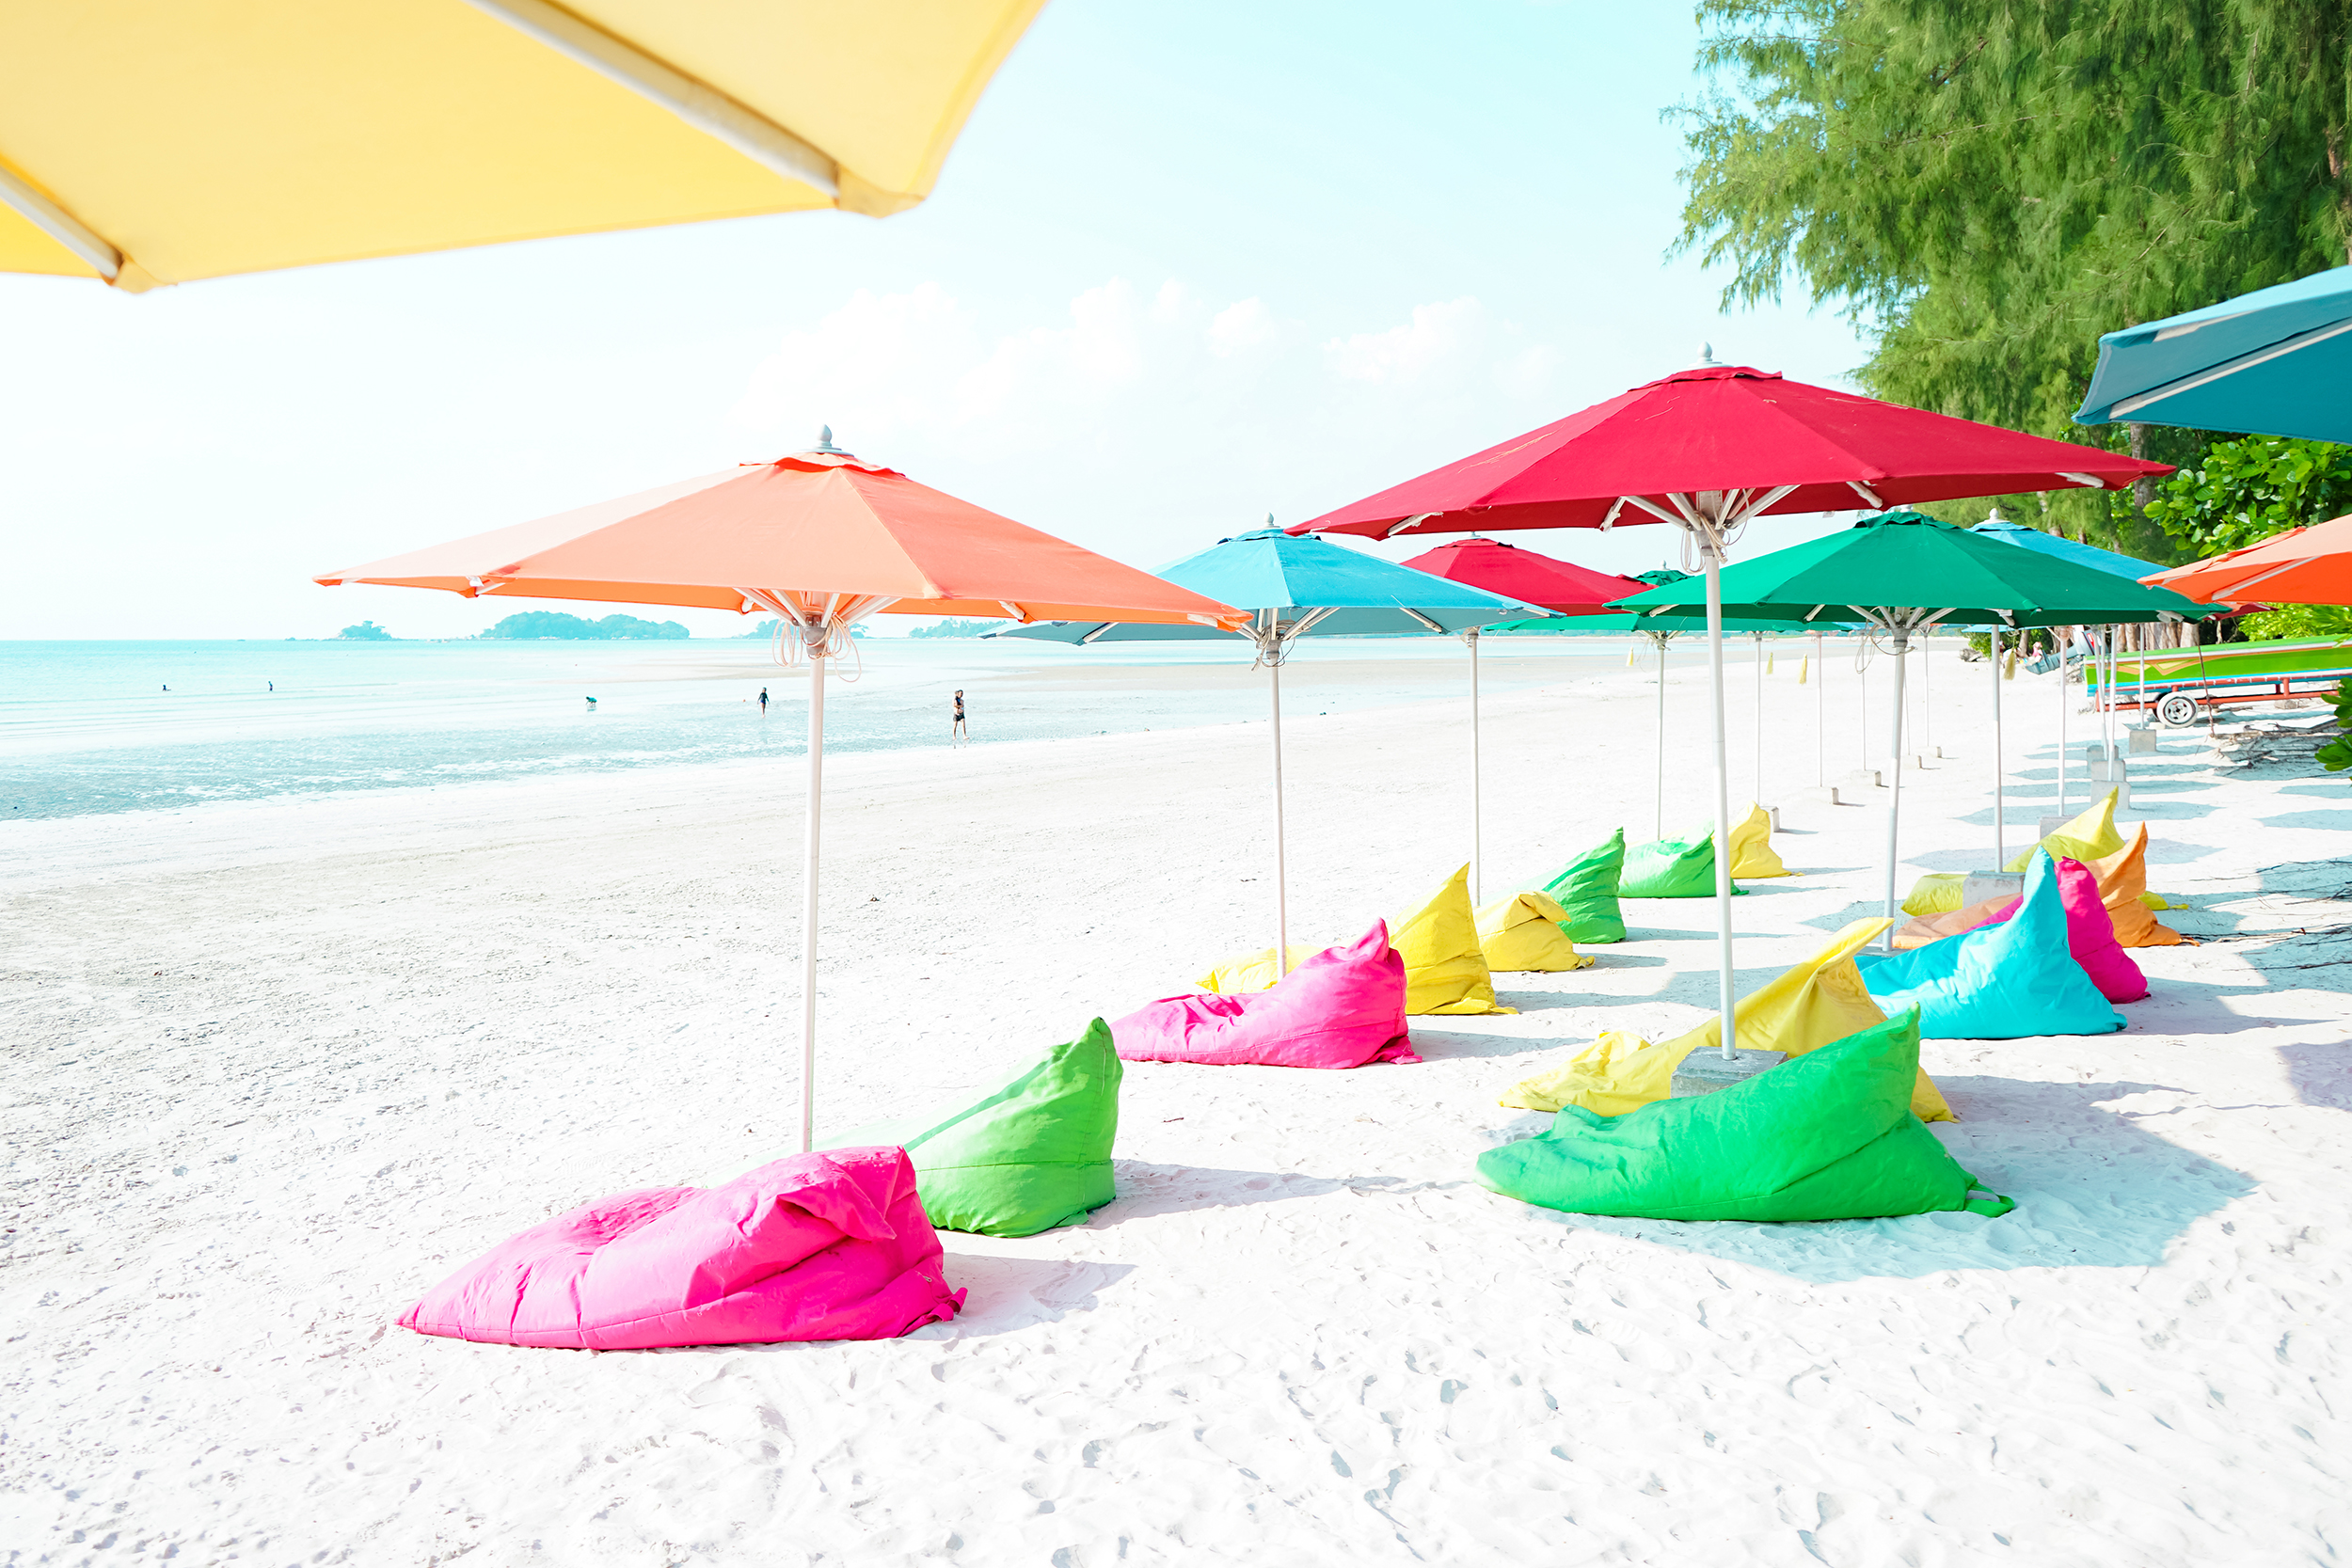 5 Best Beaches in Bintan Island